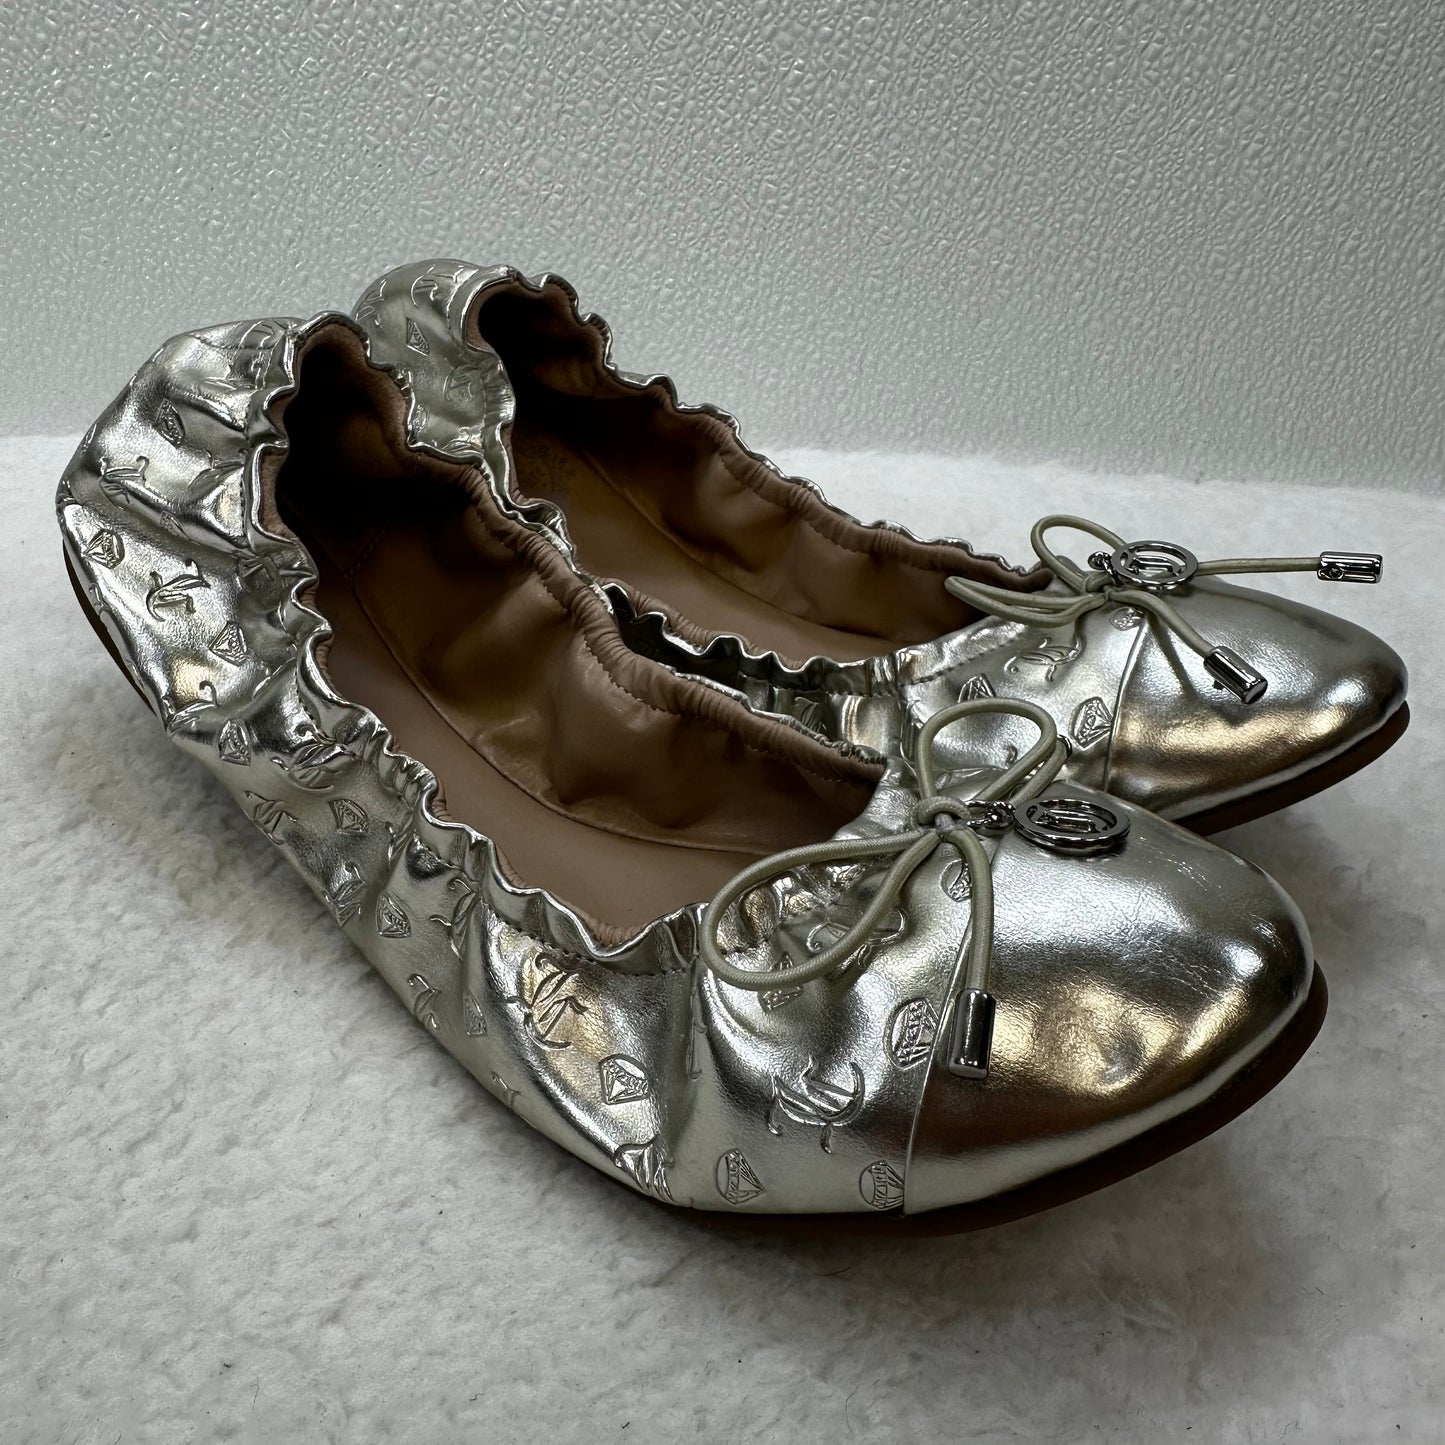 Metallic Shoes Flats Ballet Juicy Couture, Size 9